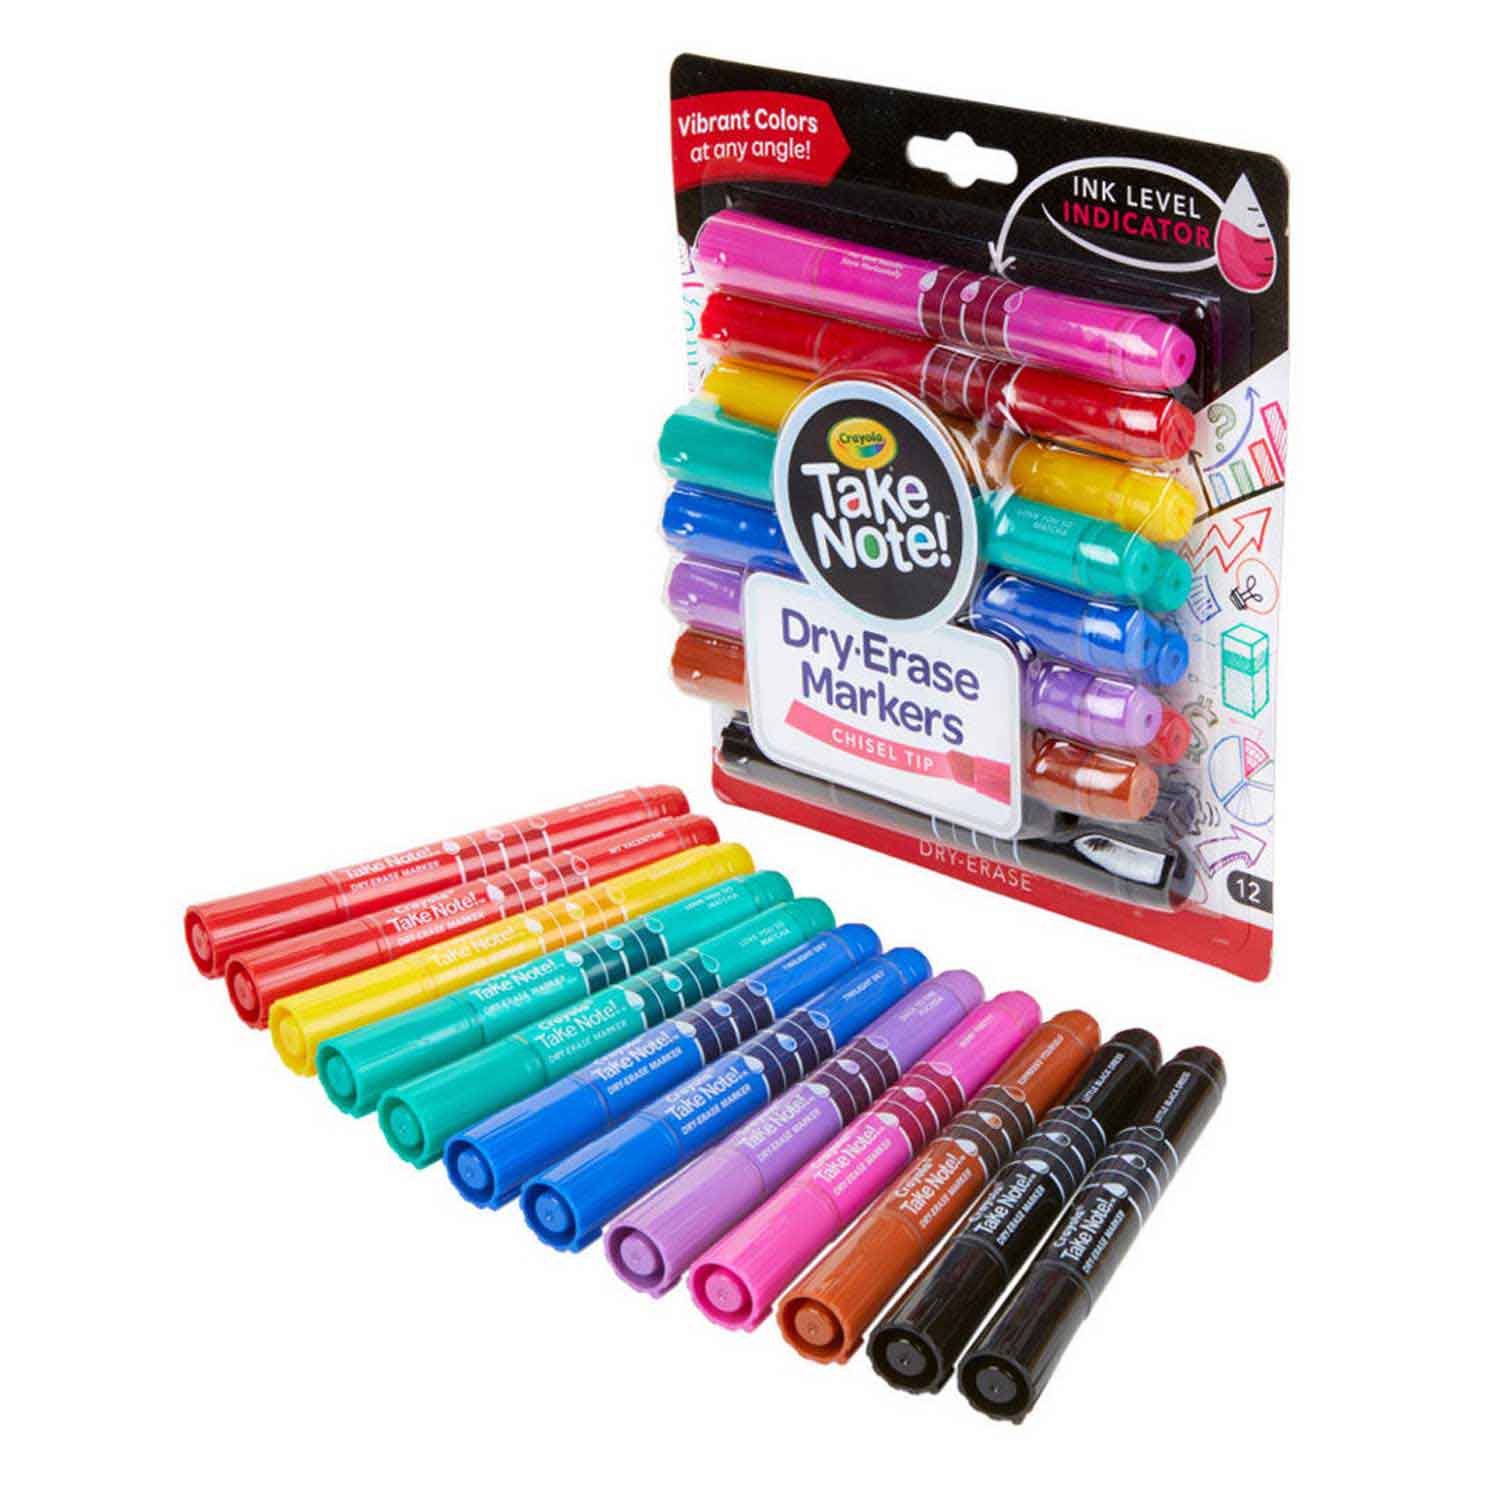 Crayola® Take Note Dry-Erase Markers, 12 Ct